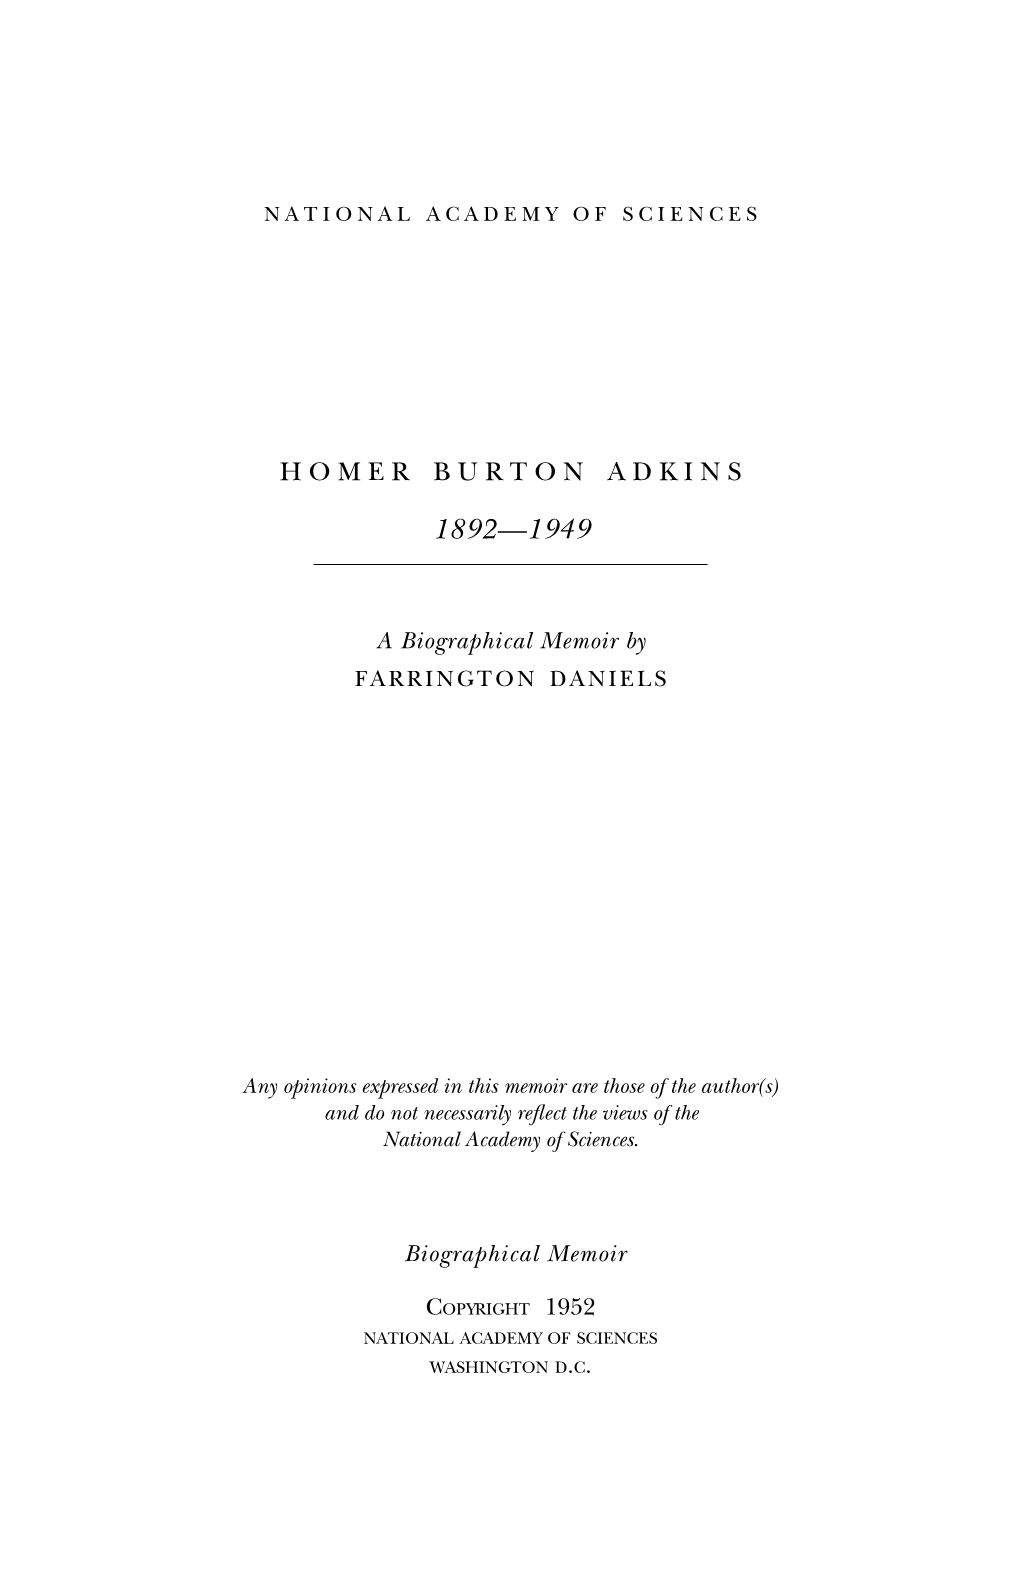 Homer Burton Adkins